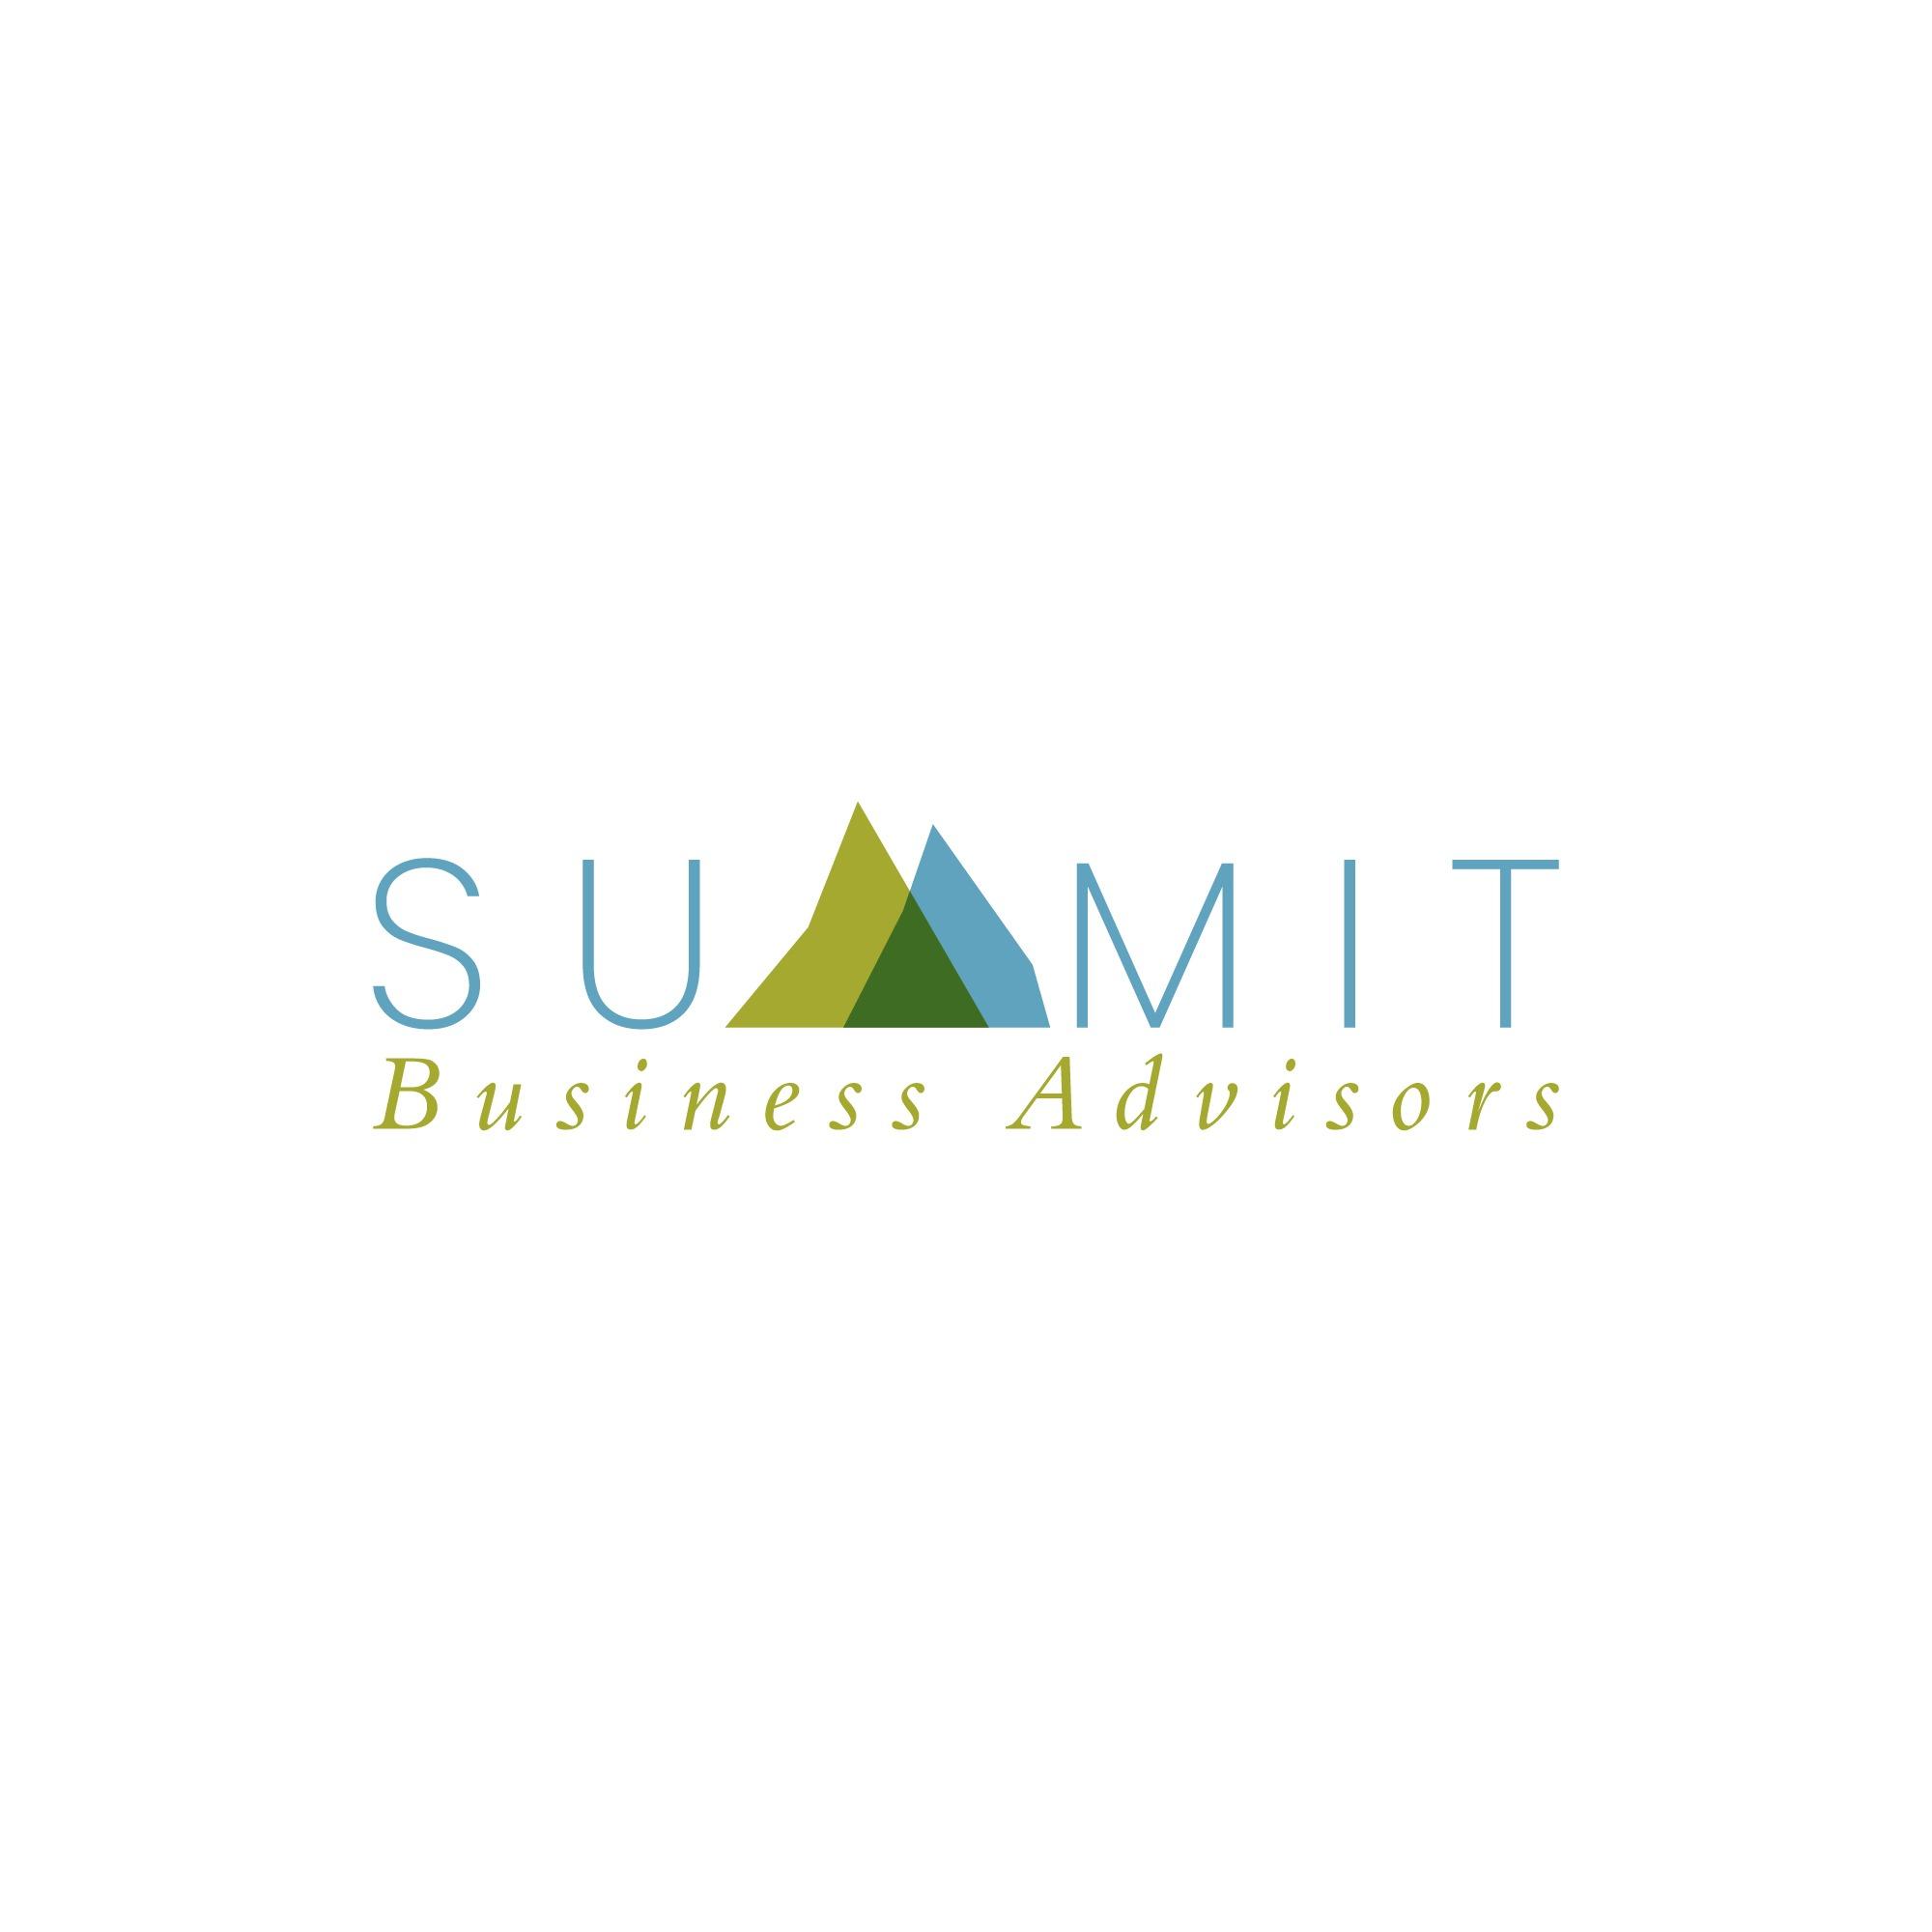 Summit Business Advisors LLC - Los Angeles, CA 90064 - (310)313-1510 | ShowMeLocal.com